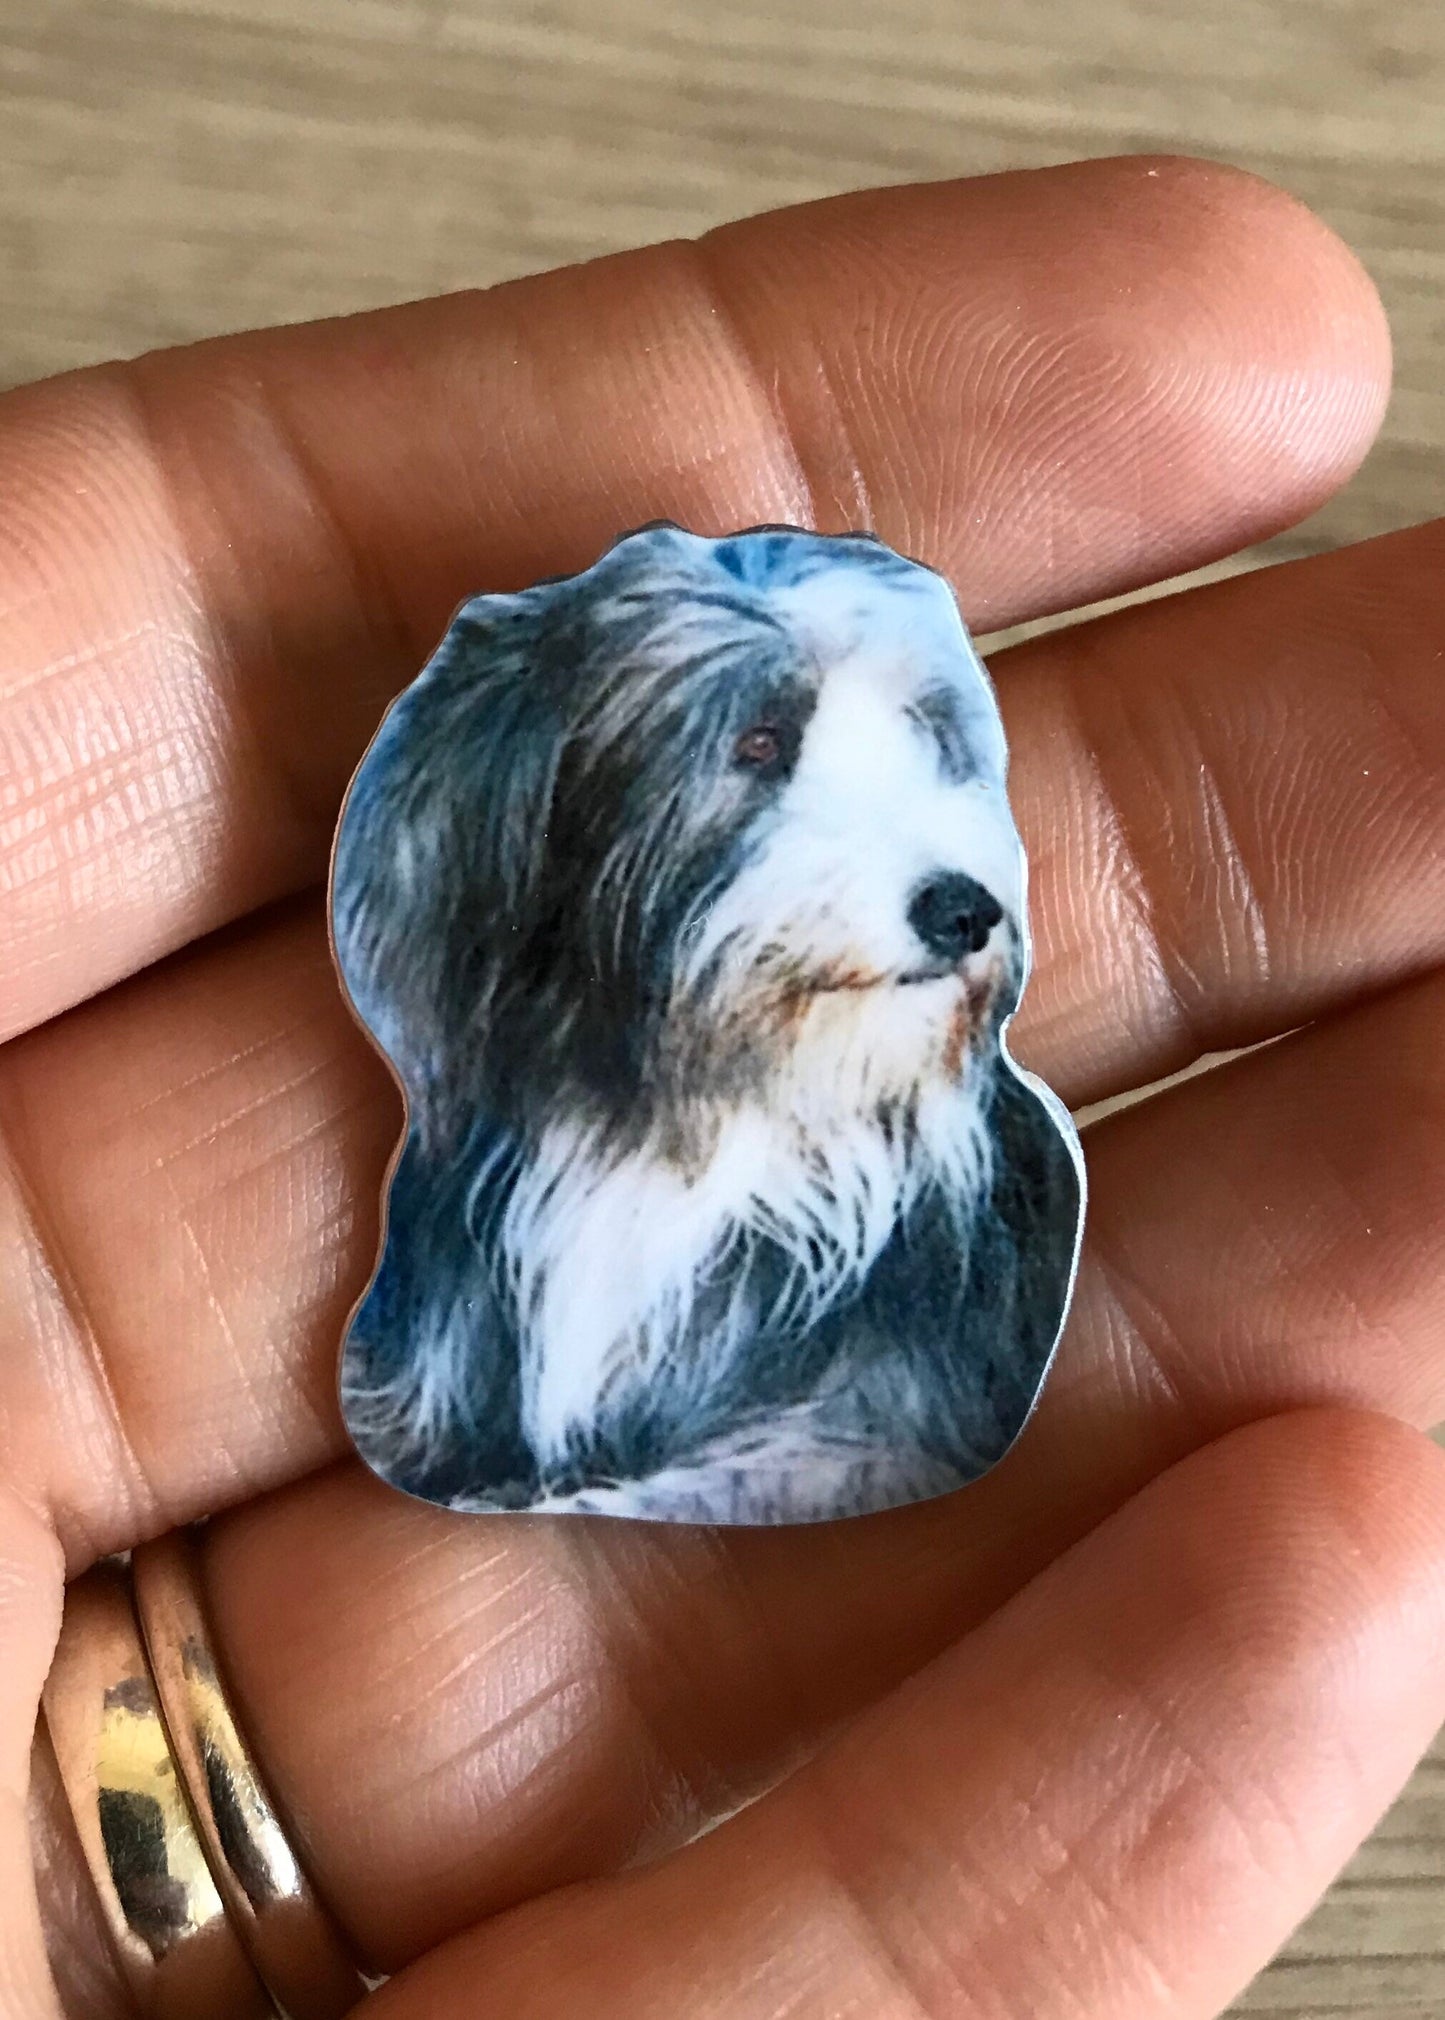 Custom dog brooch - custom dog badge - custom dog pin - dog pet brooch - personalised dog brooch - dog photo brooch